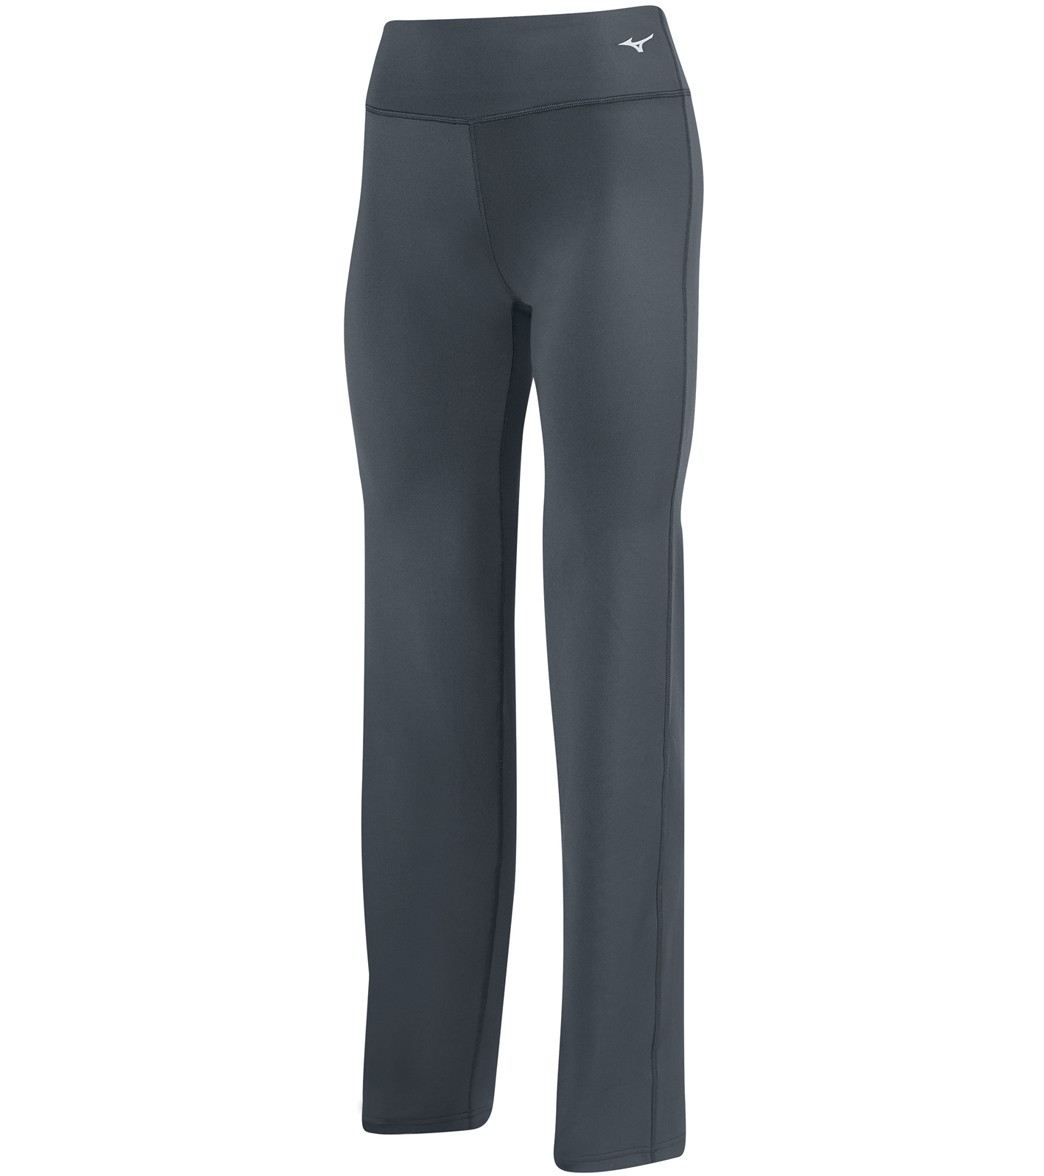 Mizuno Women's Align Long Volleyball Pants - Charcoal Medium - Swimoutlet.com